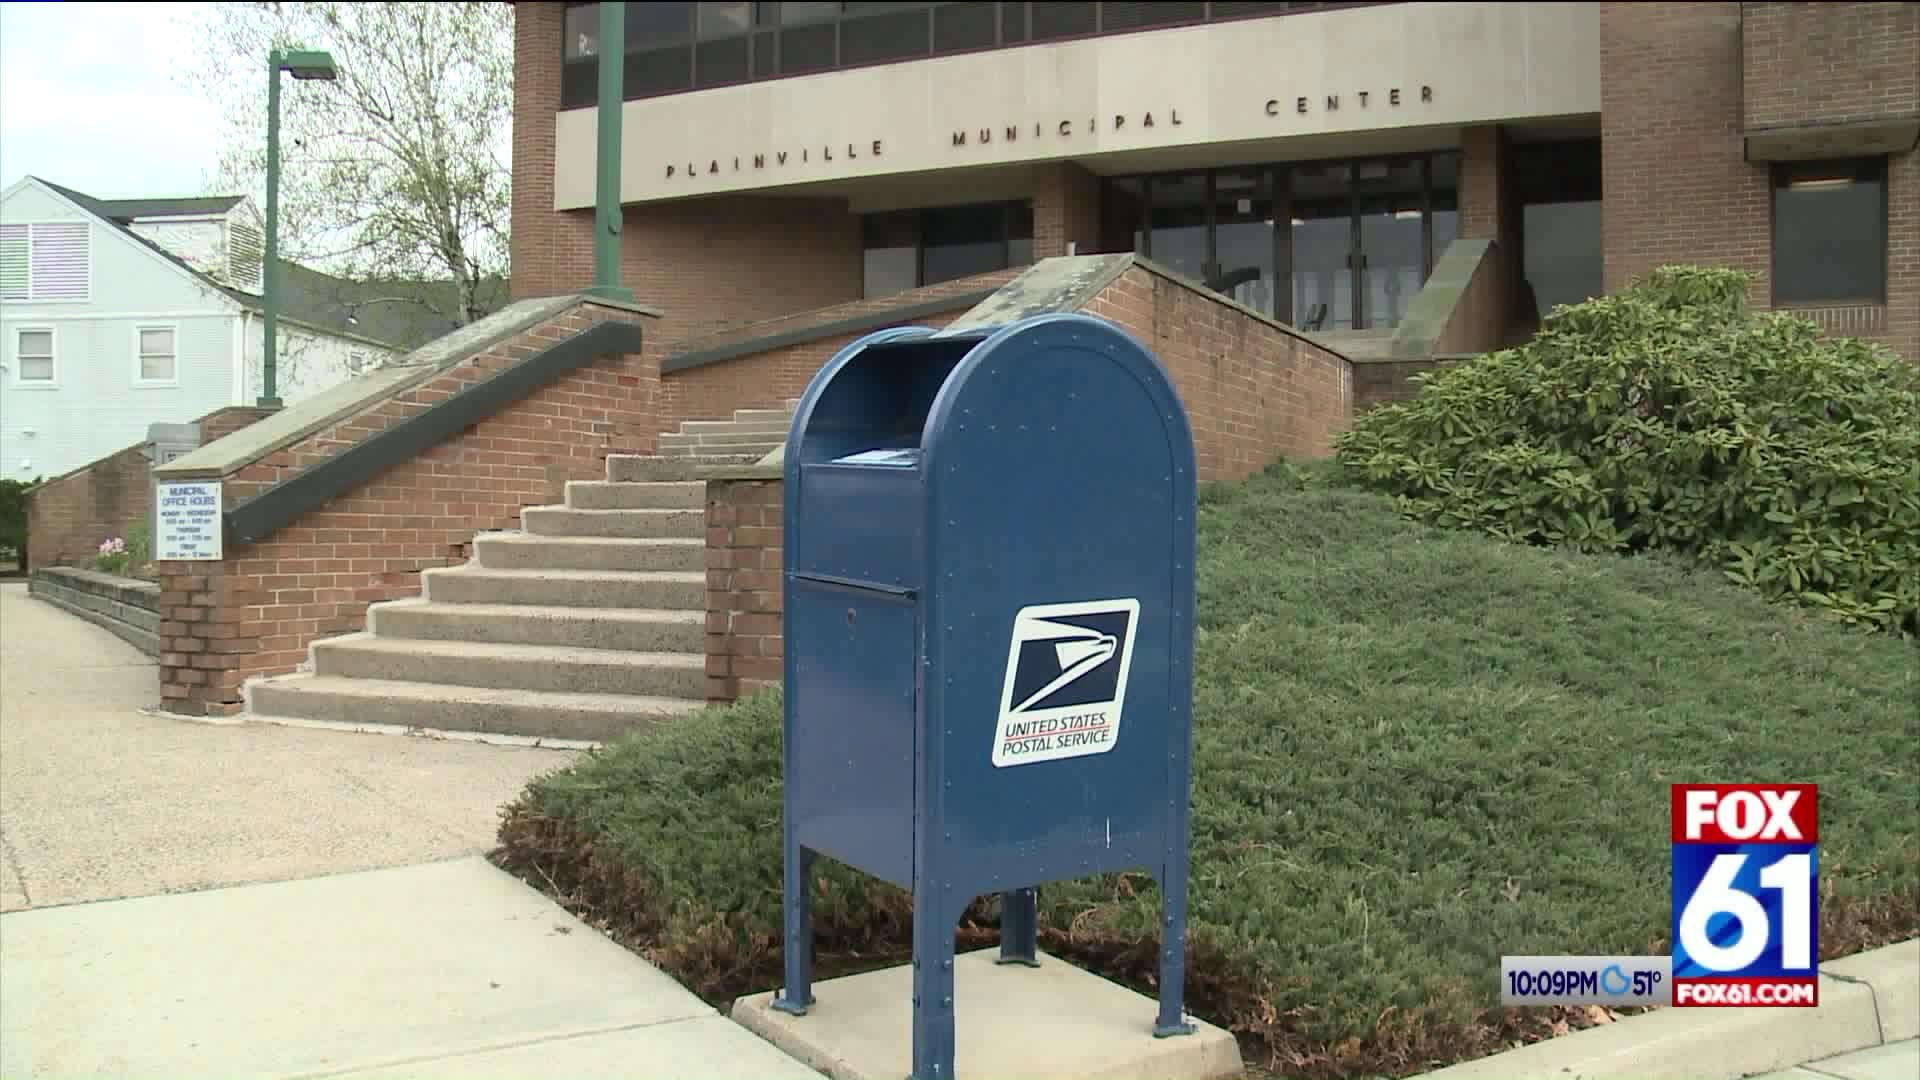 Plainville police: Post office box broken into, mail stolen 